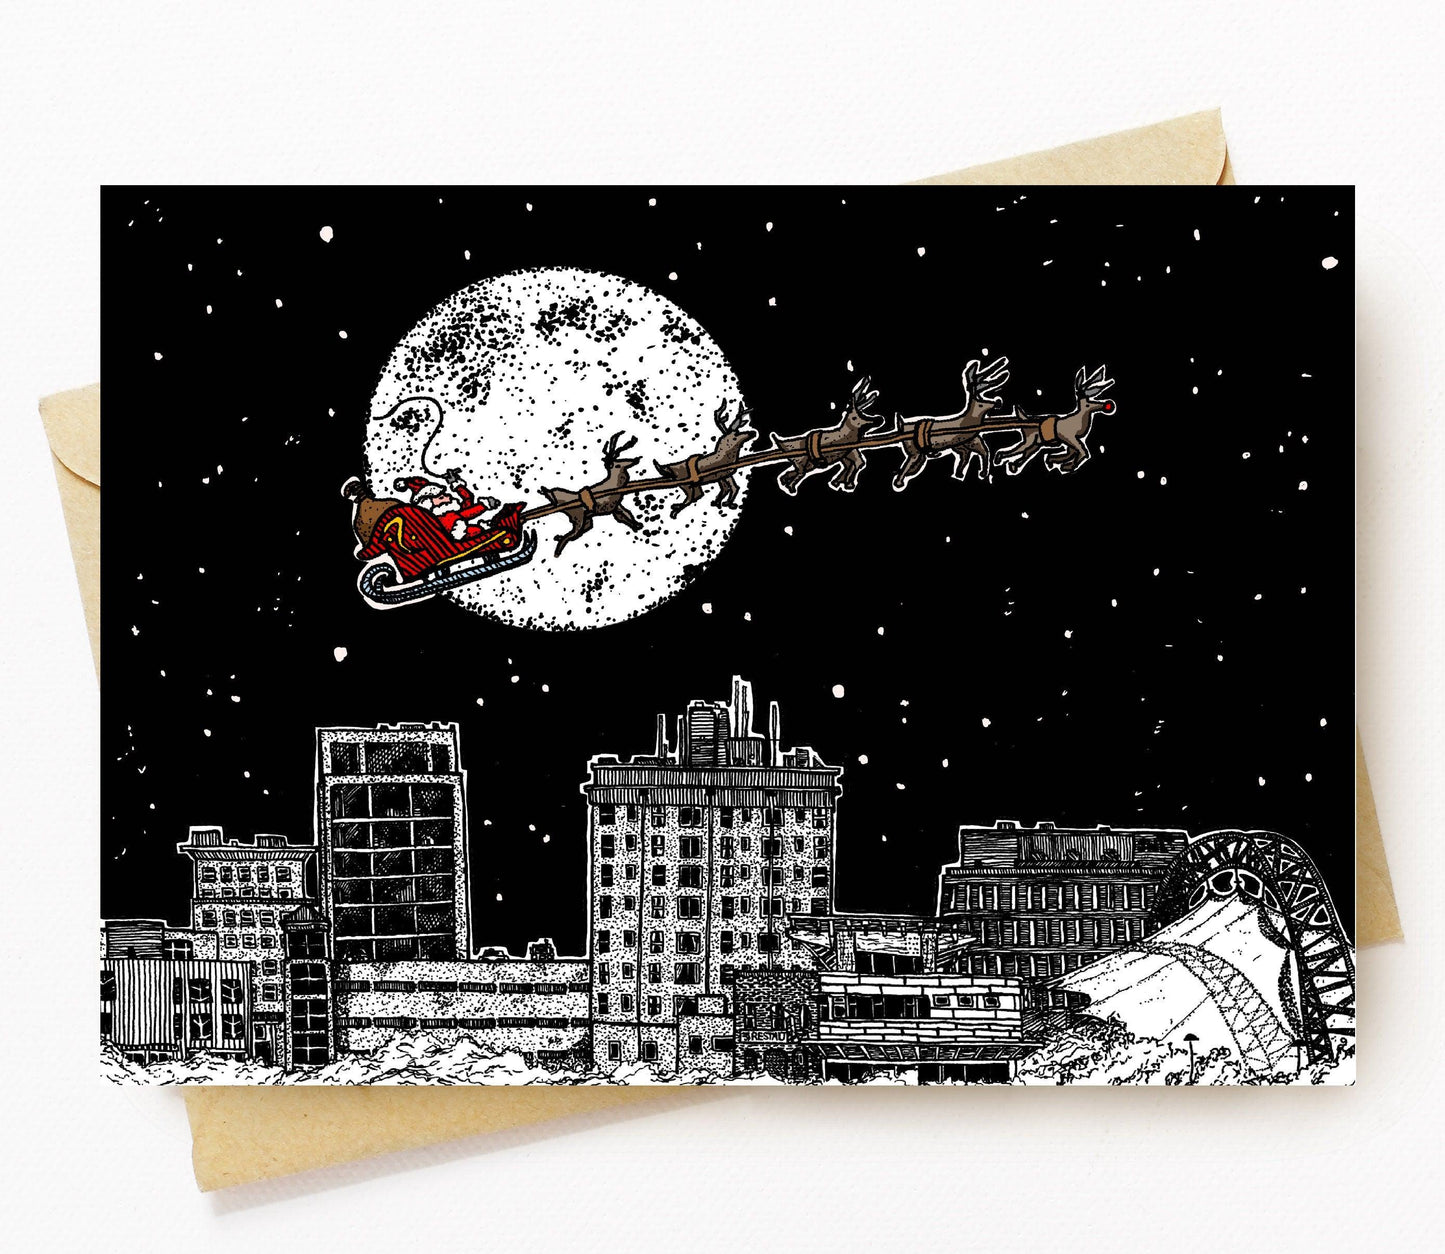 BellavanceInk: Pen & Ink Charlottesville City Skyline Christmas Card With Santa Clause And Reindeer 5 x 7 Inches - BellavanceInk